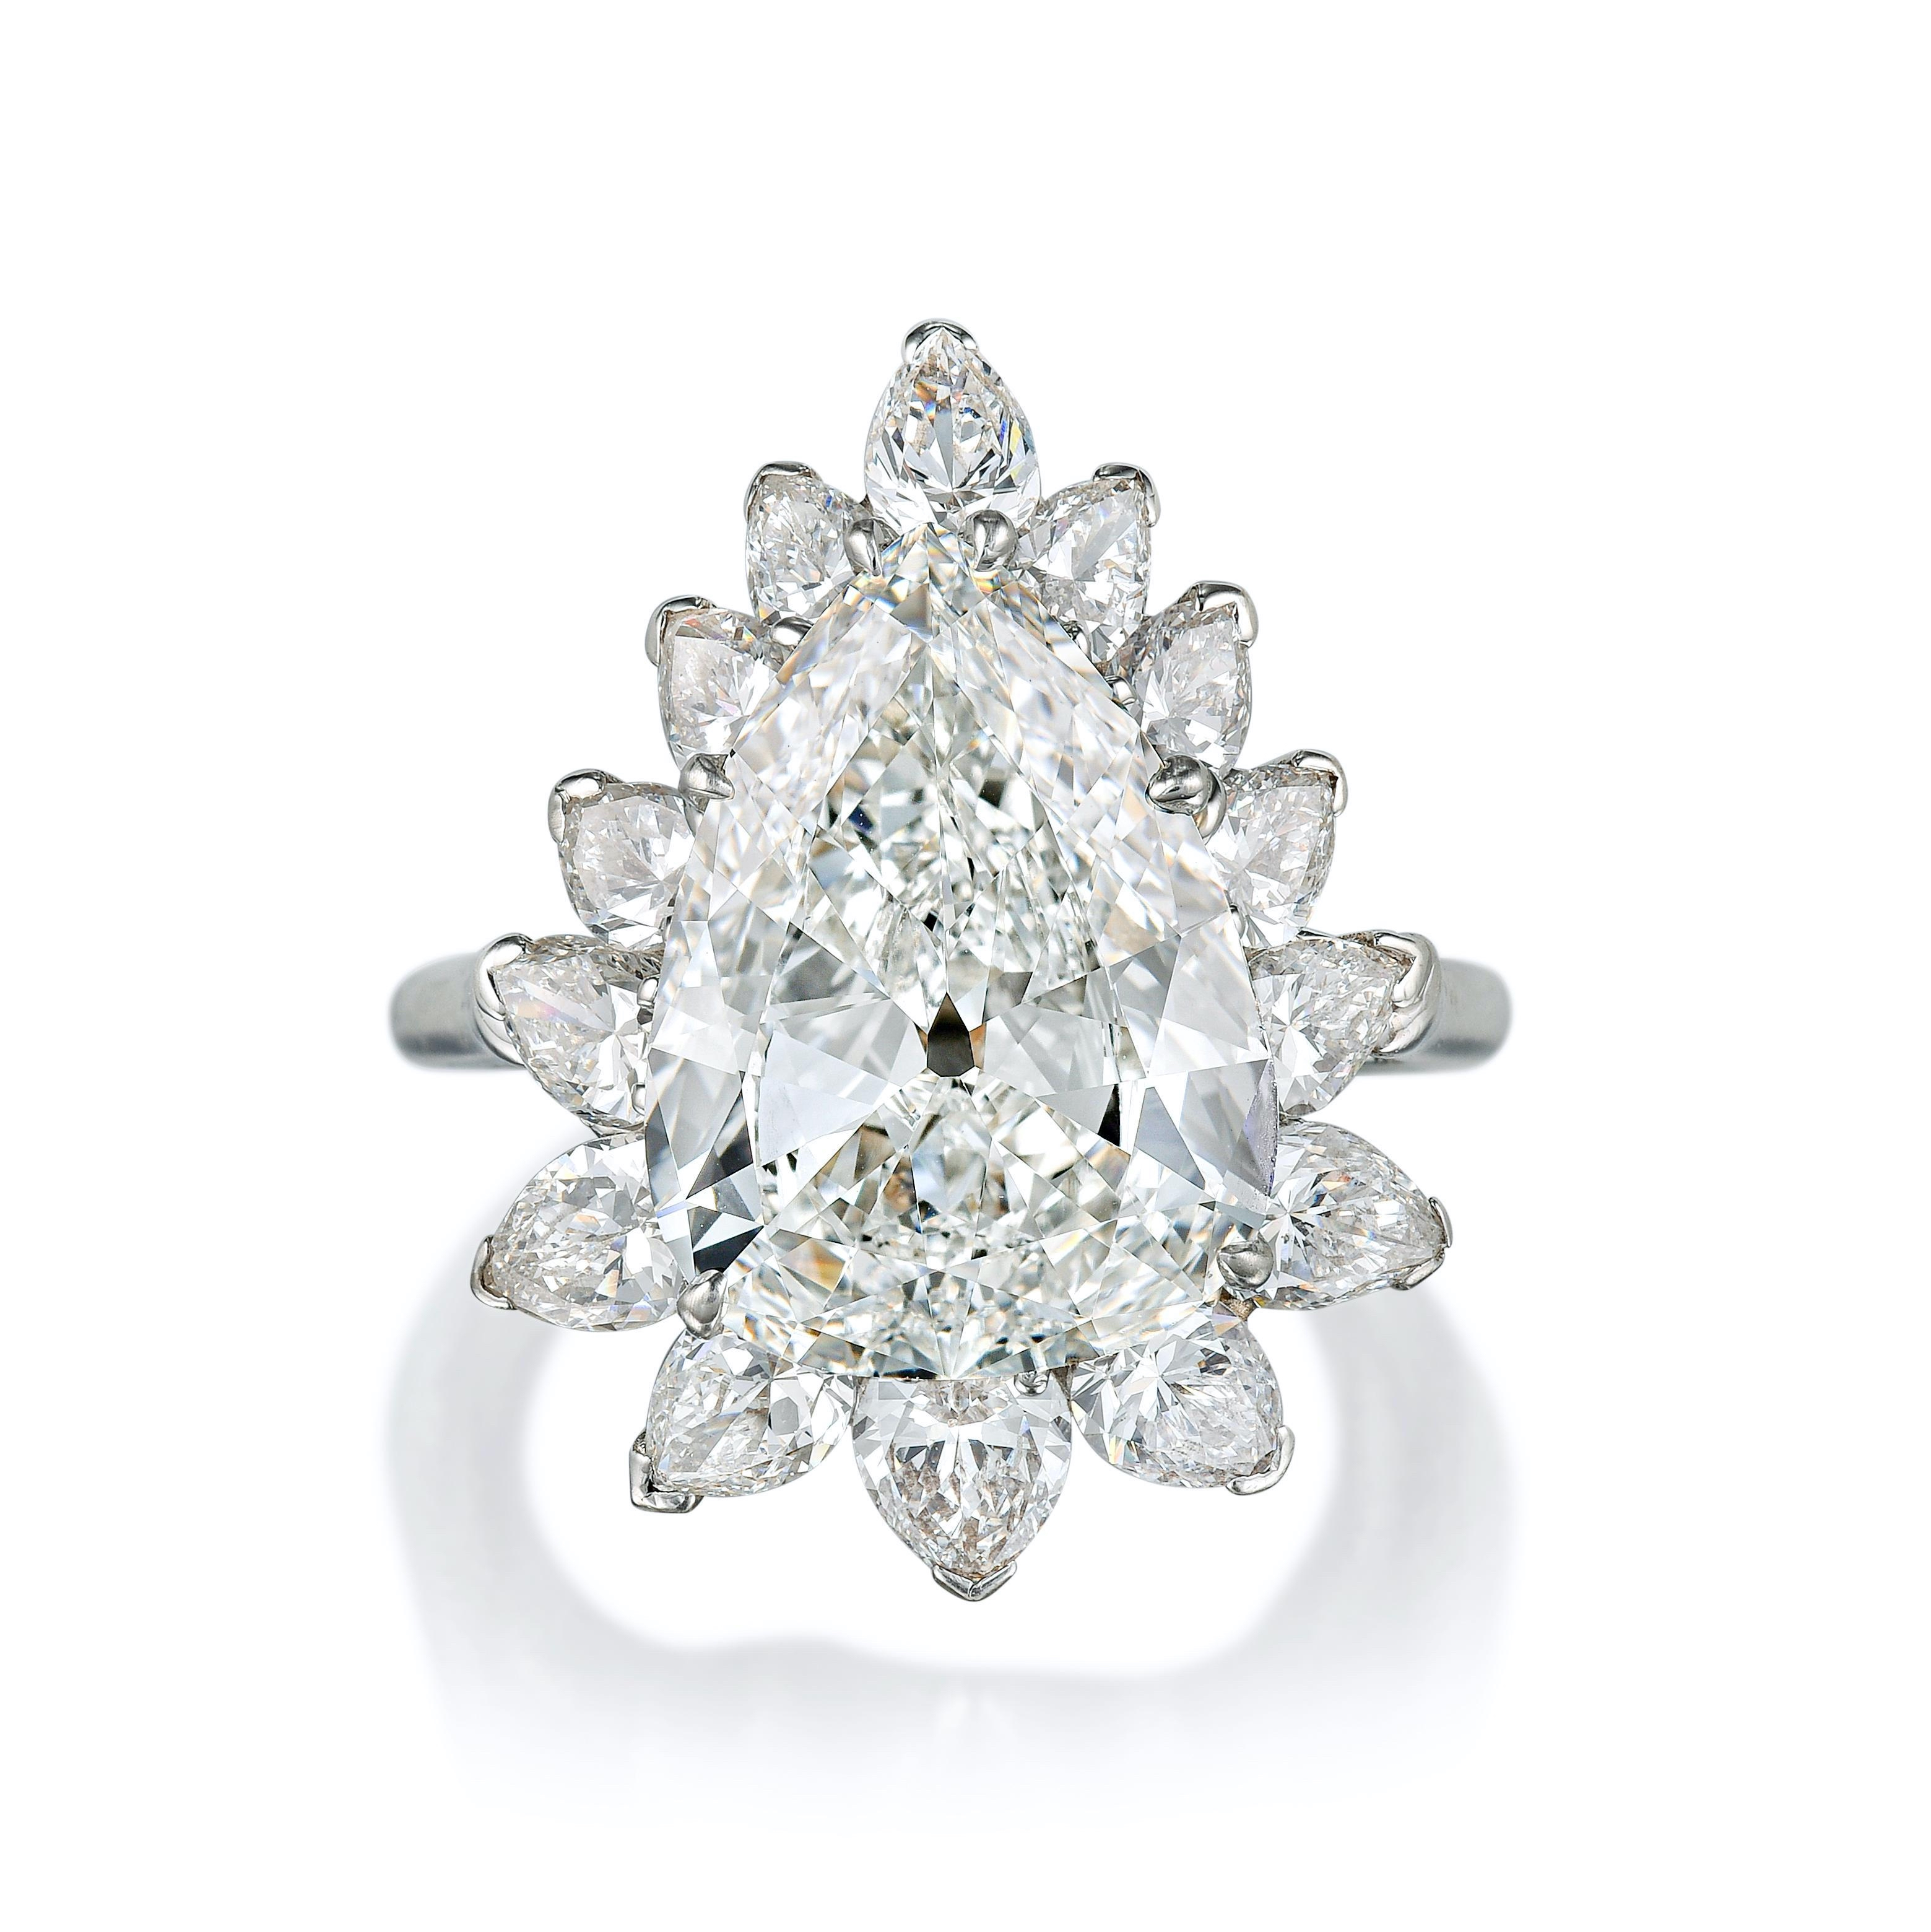 Harry Winston Pre-Owned Harry Winston Diamond Engagement Ring in Platinum  (2.66 ct Cushion D/VVS2) 102198 - Jomashop